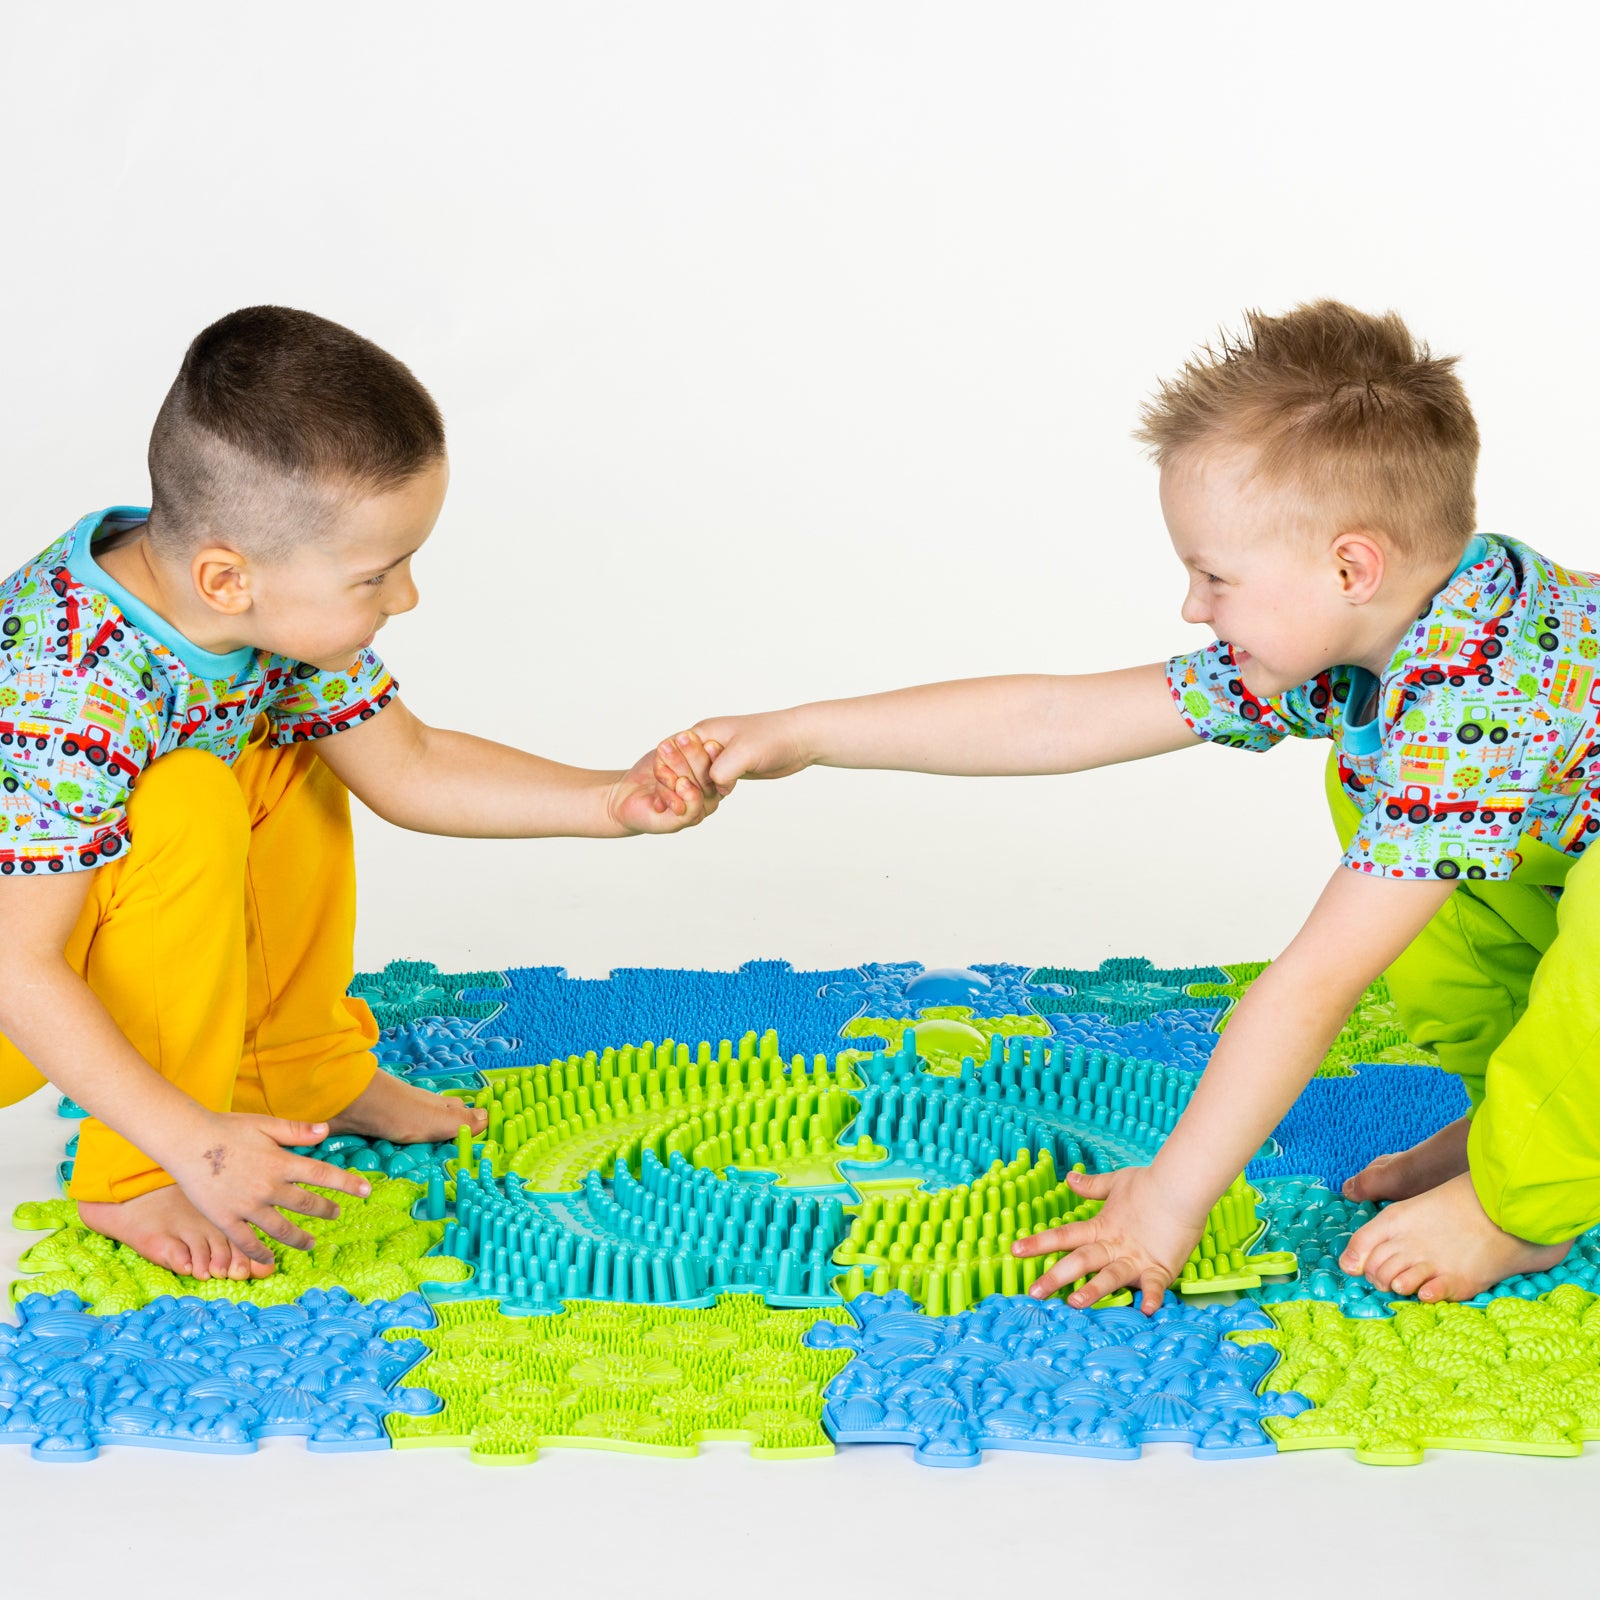 Tactile games with sensory play mats